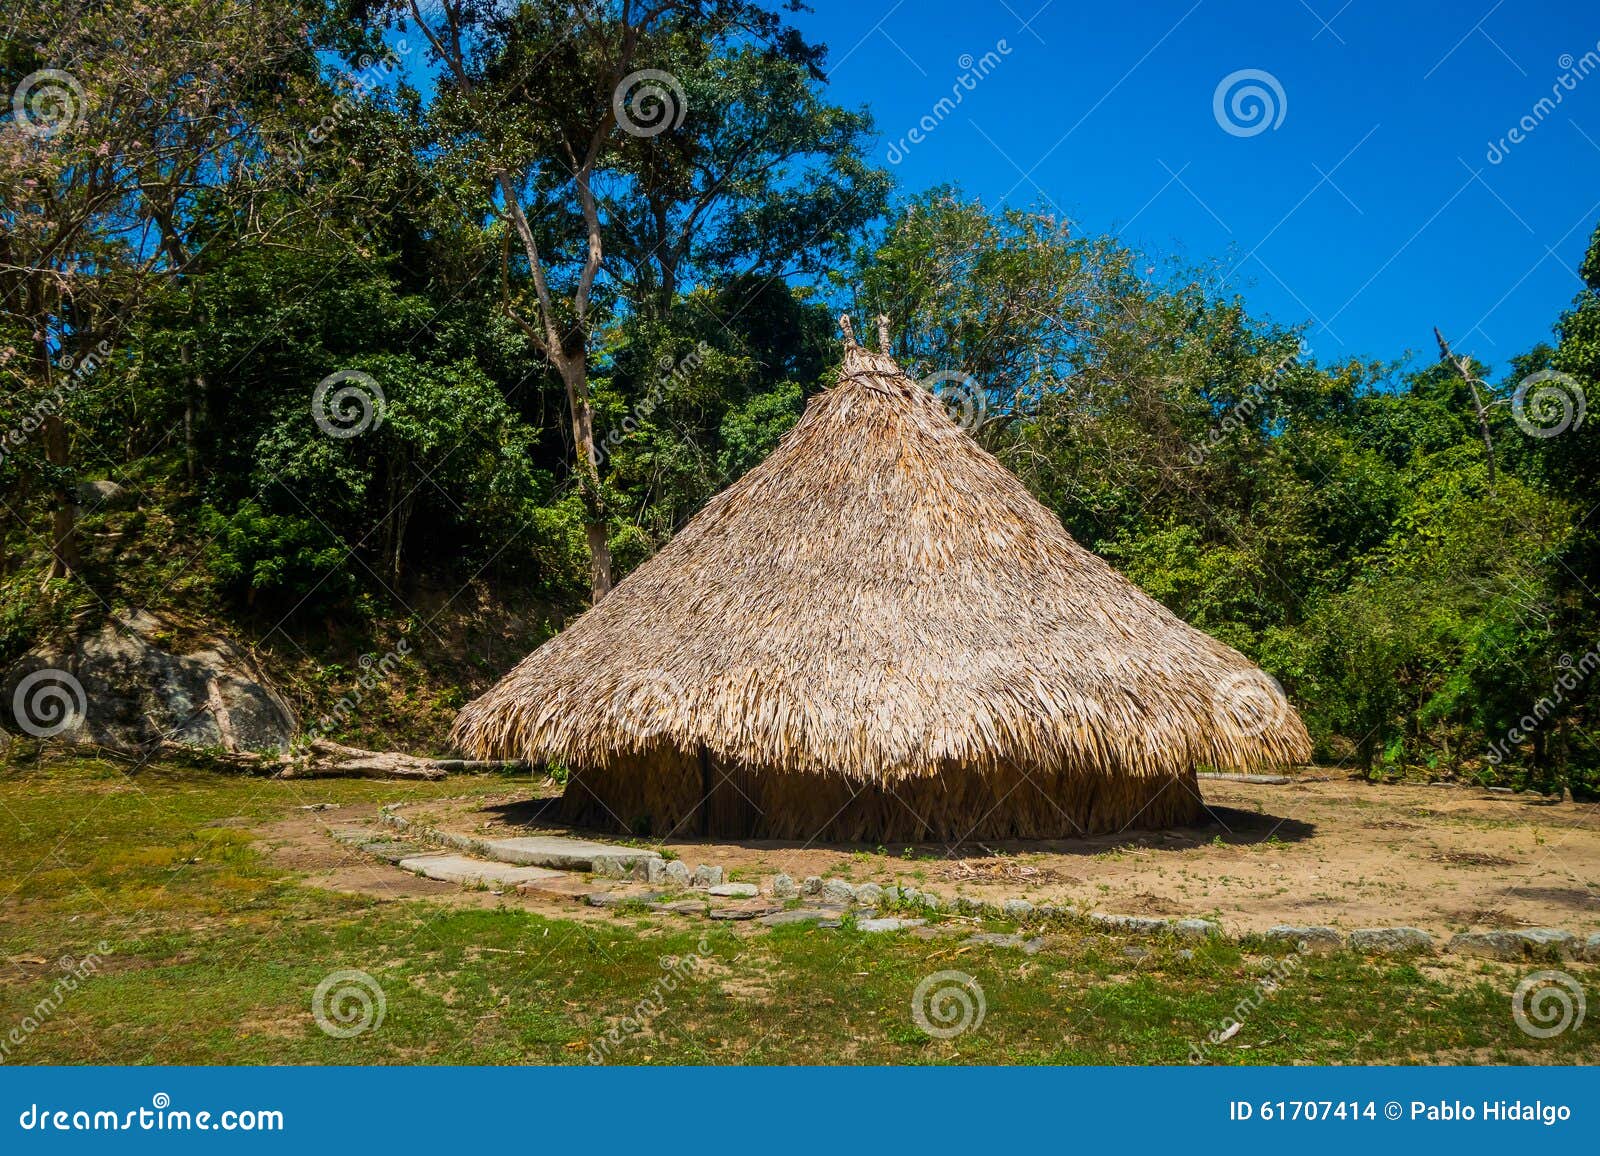 traditional house of kogi people, indigenous